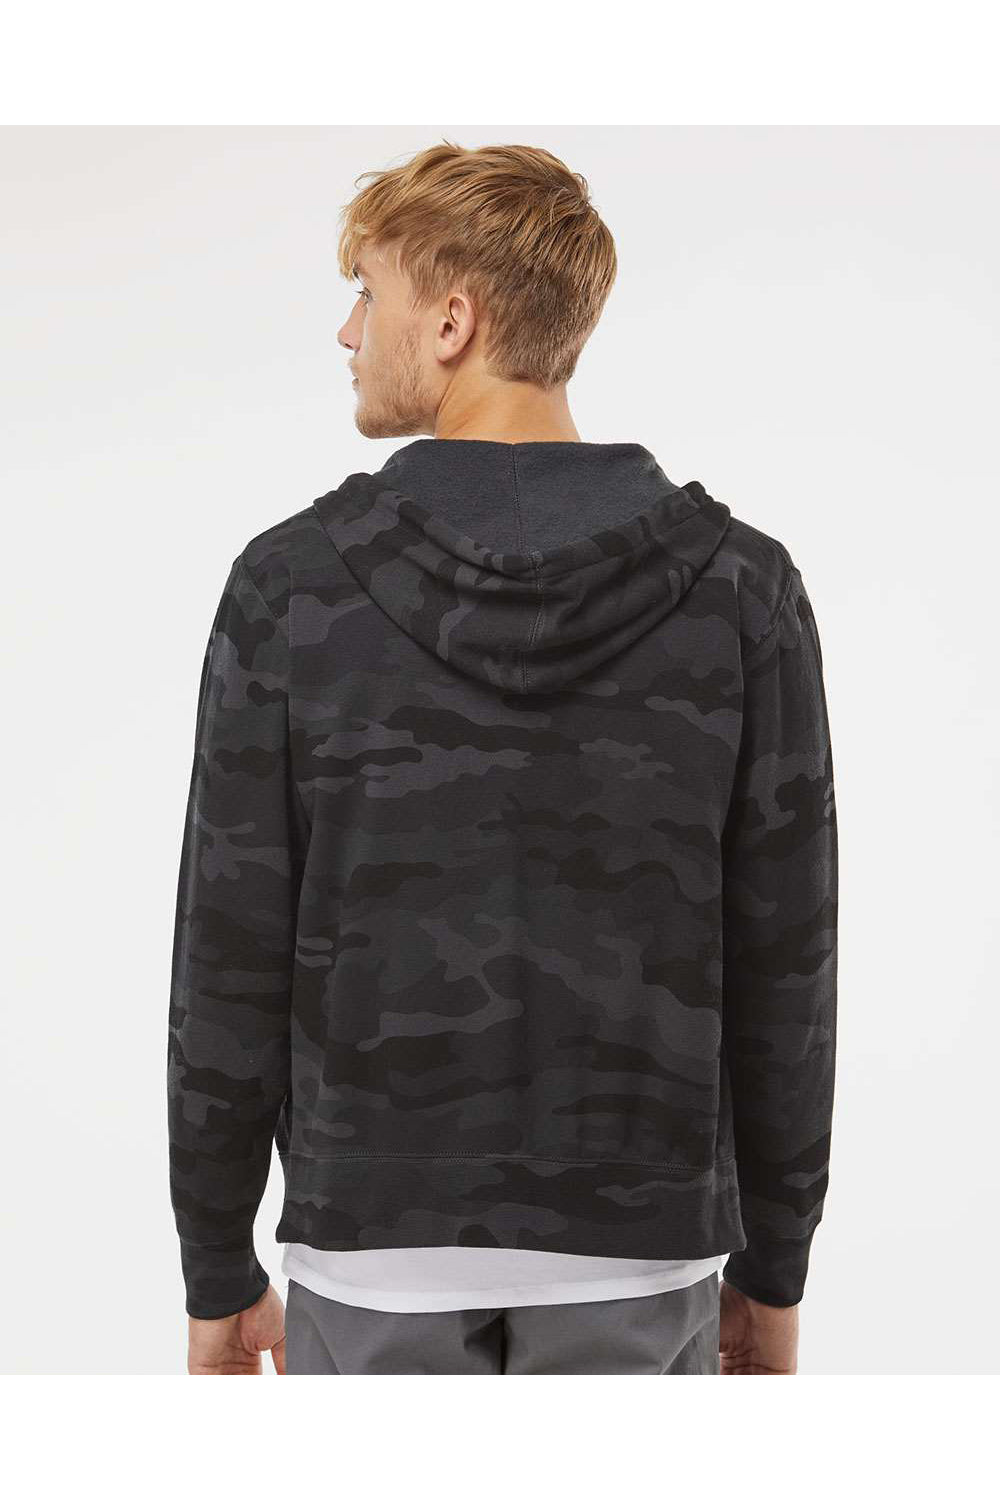 Independent Trading Co. AFX90UNZ Mens Full Zip Hooded Sweatshirt Hoodie Black Camo Model Back